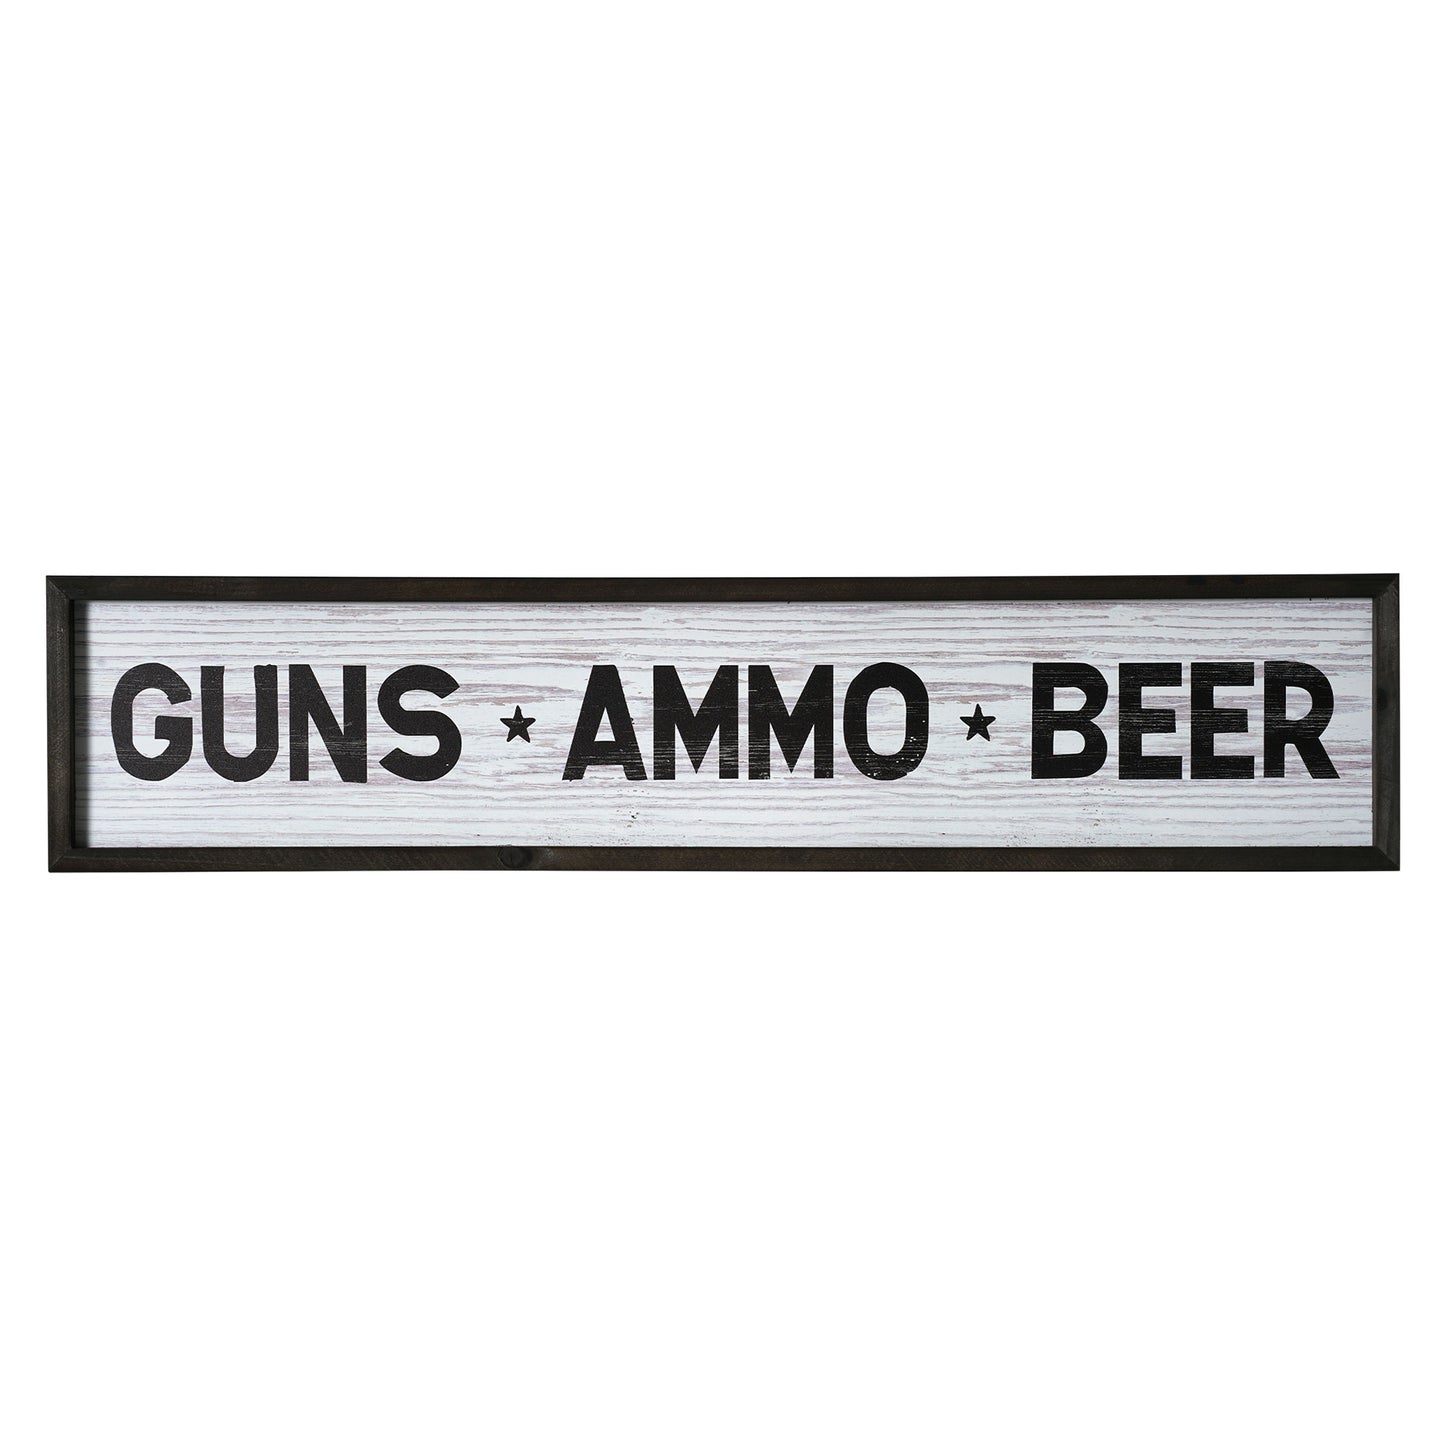 Guns, Ammo, Beer Wood Novelty Wall Sign - 36" x 8"